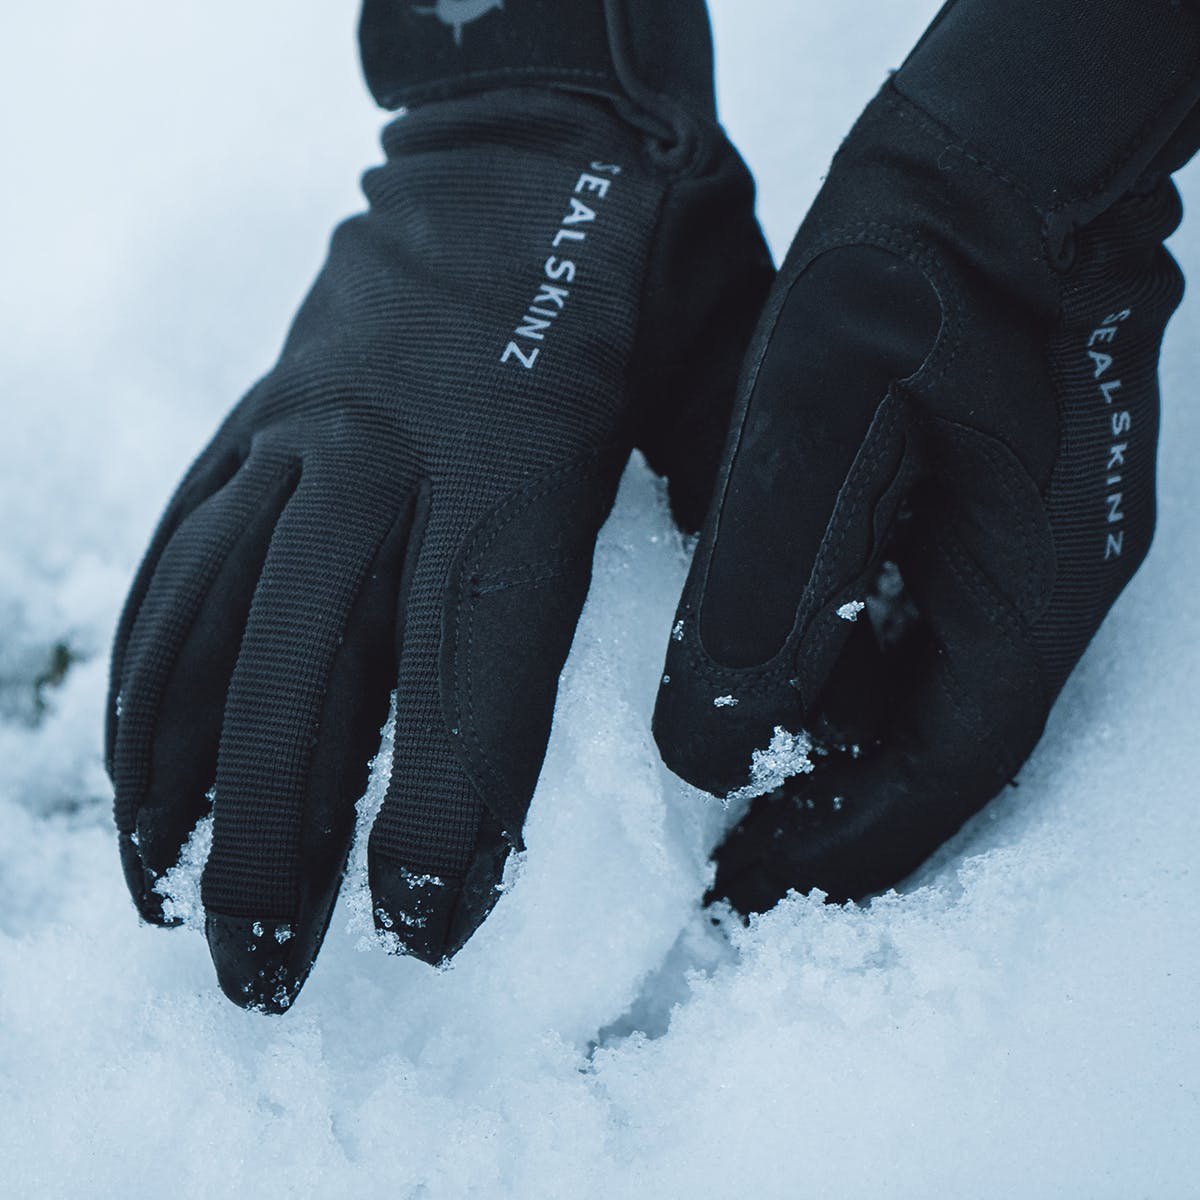 Waterproof All Weather Glove - Black